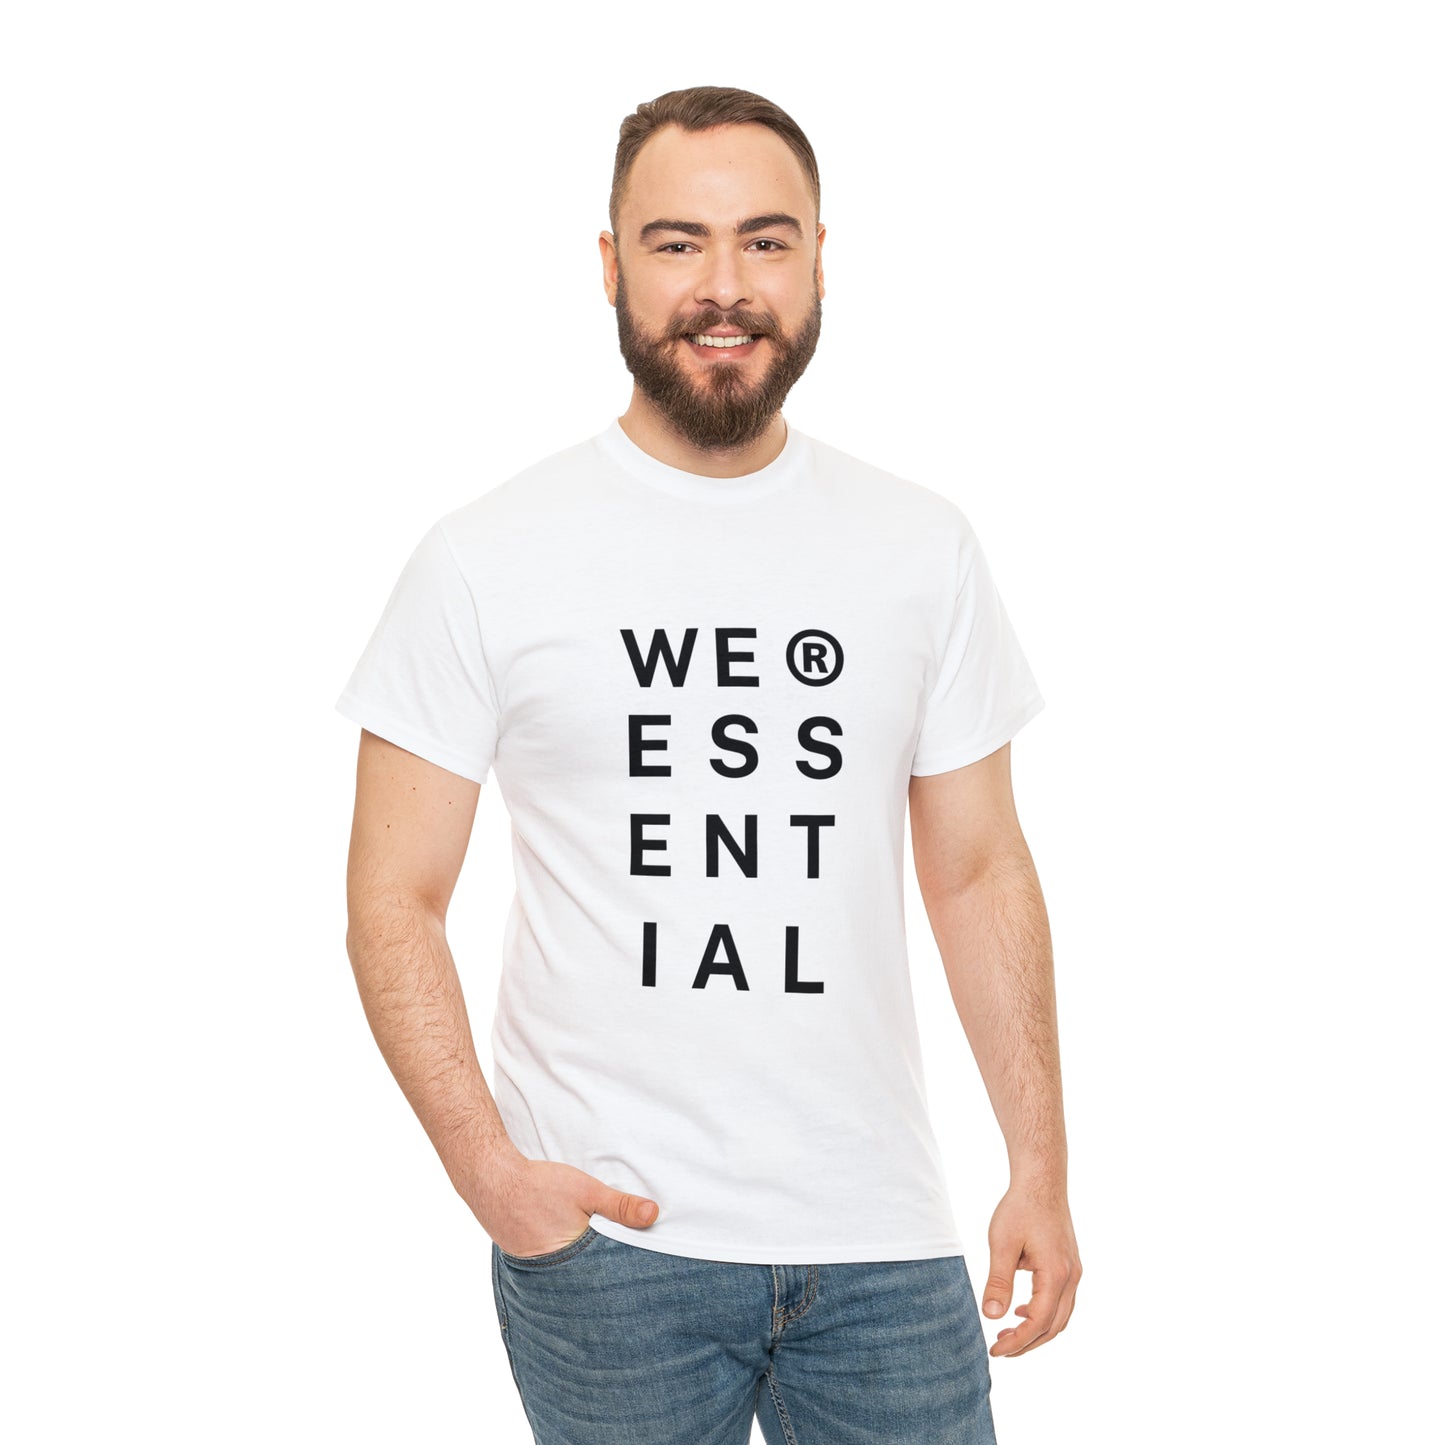 Unisex Men's or Women's T-Shirt "WE R ESSENTIAL" tee shirt  (SWERE)